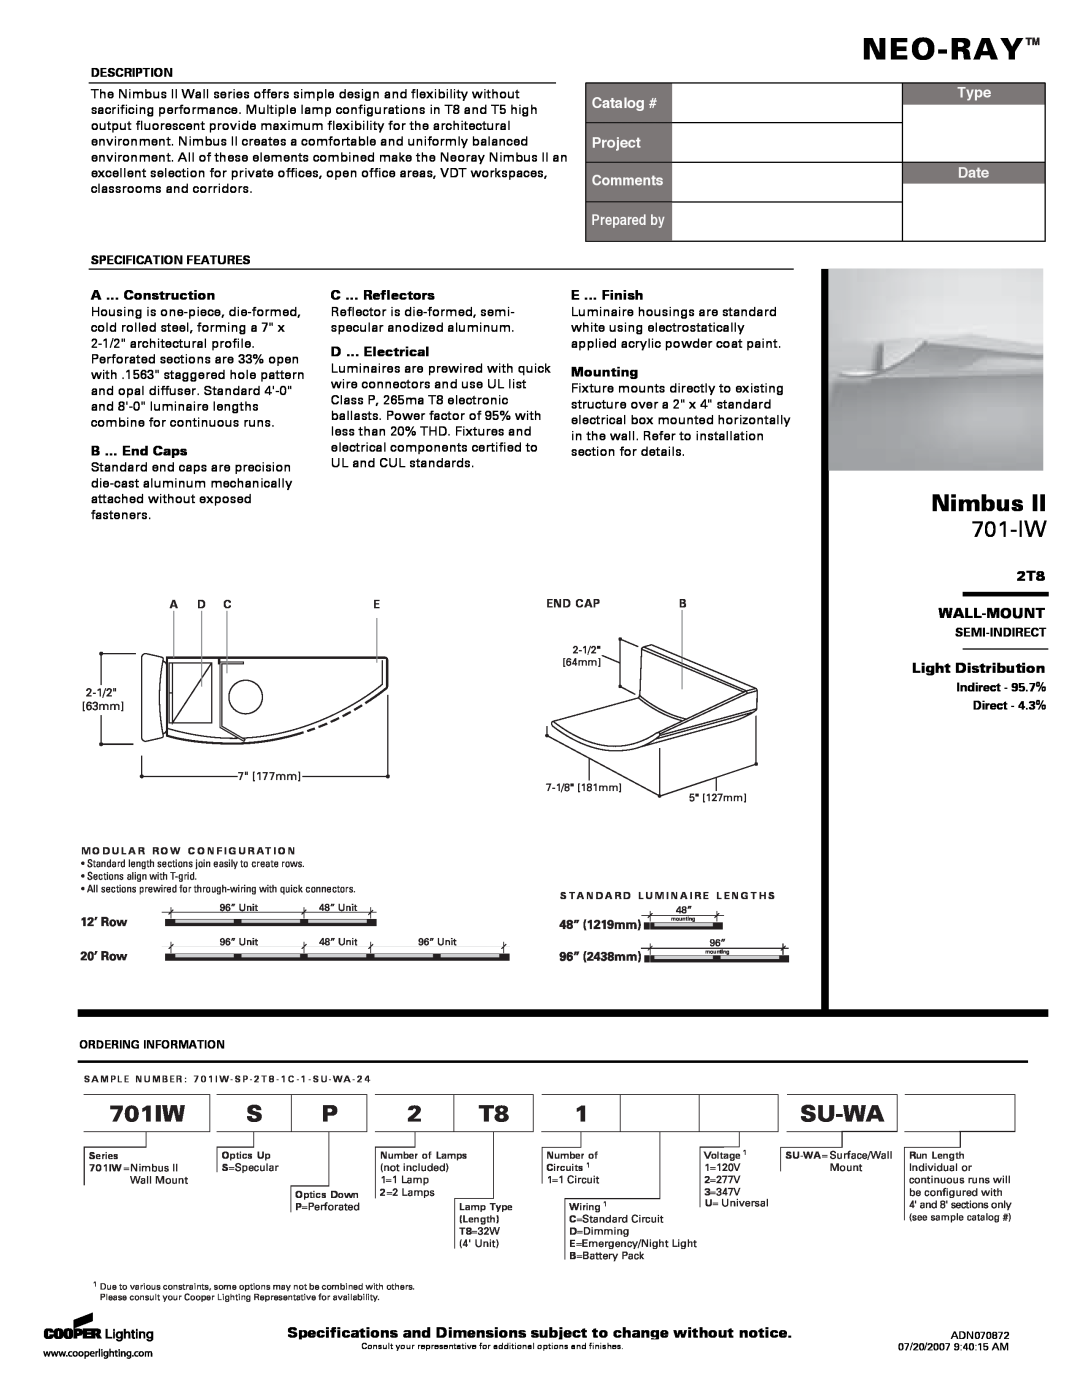 Cooper Lighting 701-IW specifications Wall-Mount, Light Distribution, Neo-Ray, Nimbus, 701IW, Su-Wa, Catalog #, Type, Date 